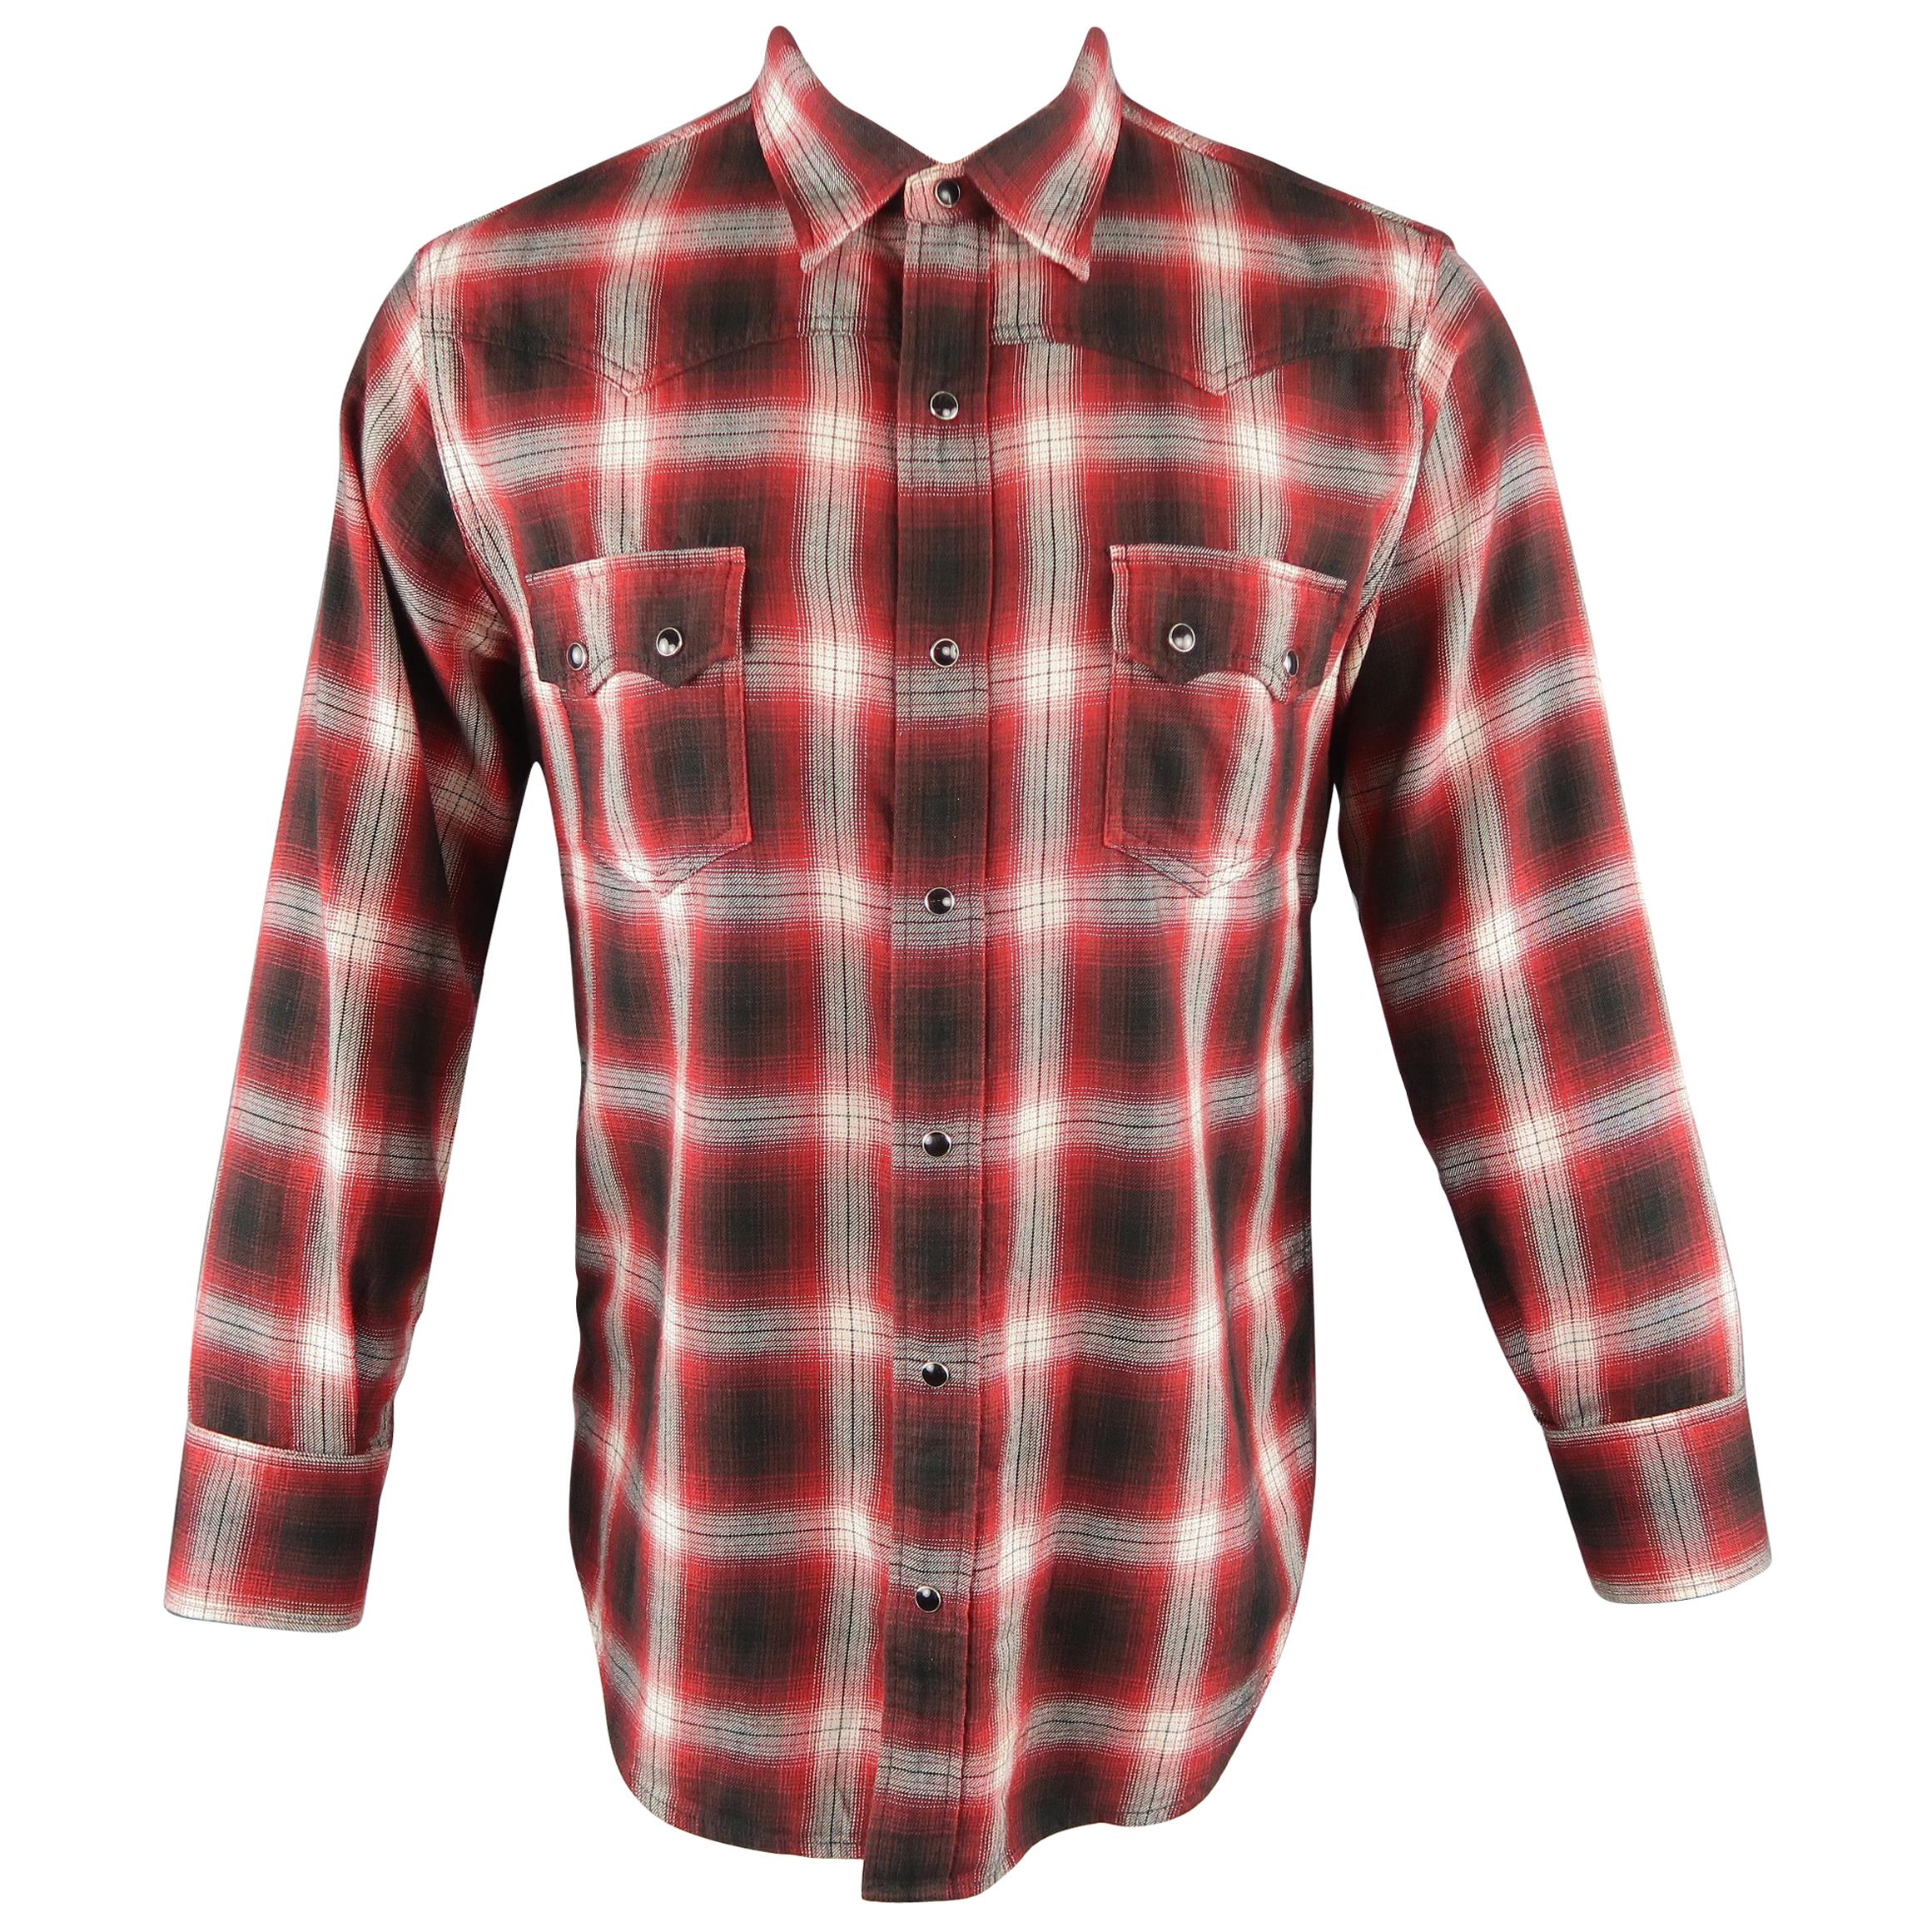 Saint Laurent Red and Black Plaid Cotton Long Sleeve Western Shirt